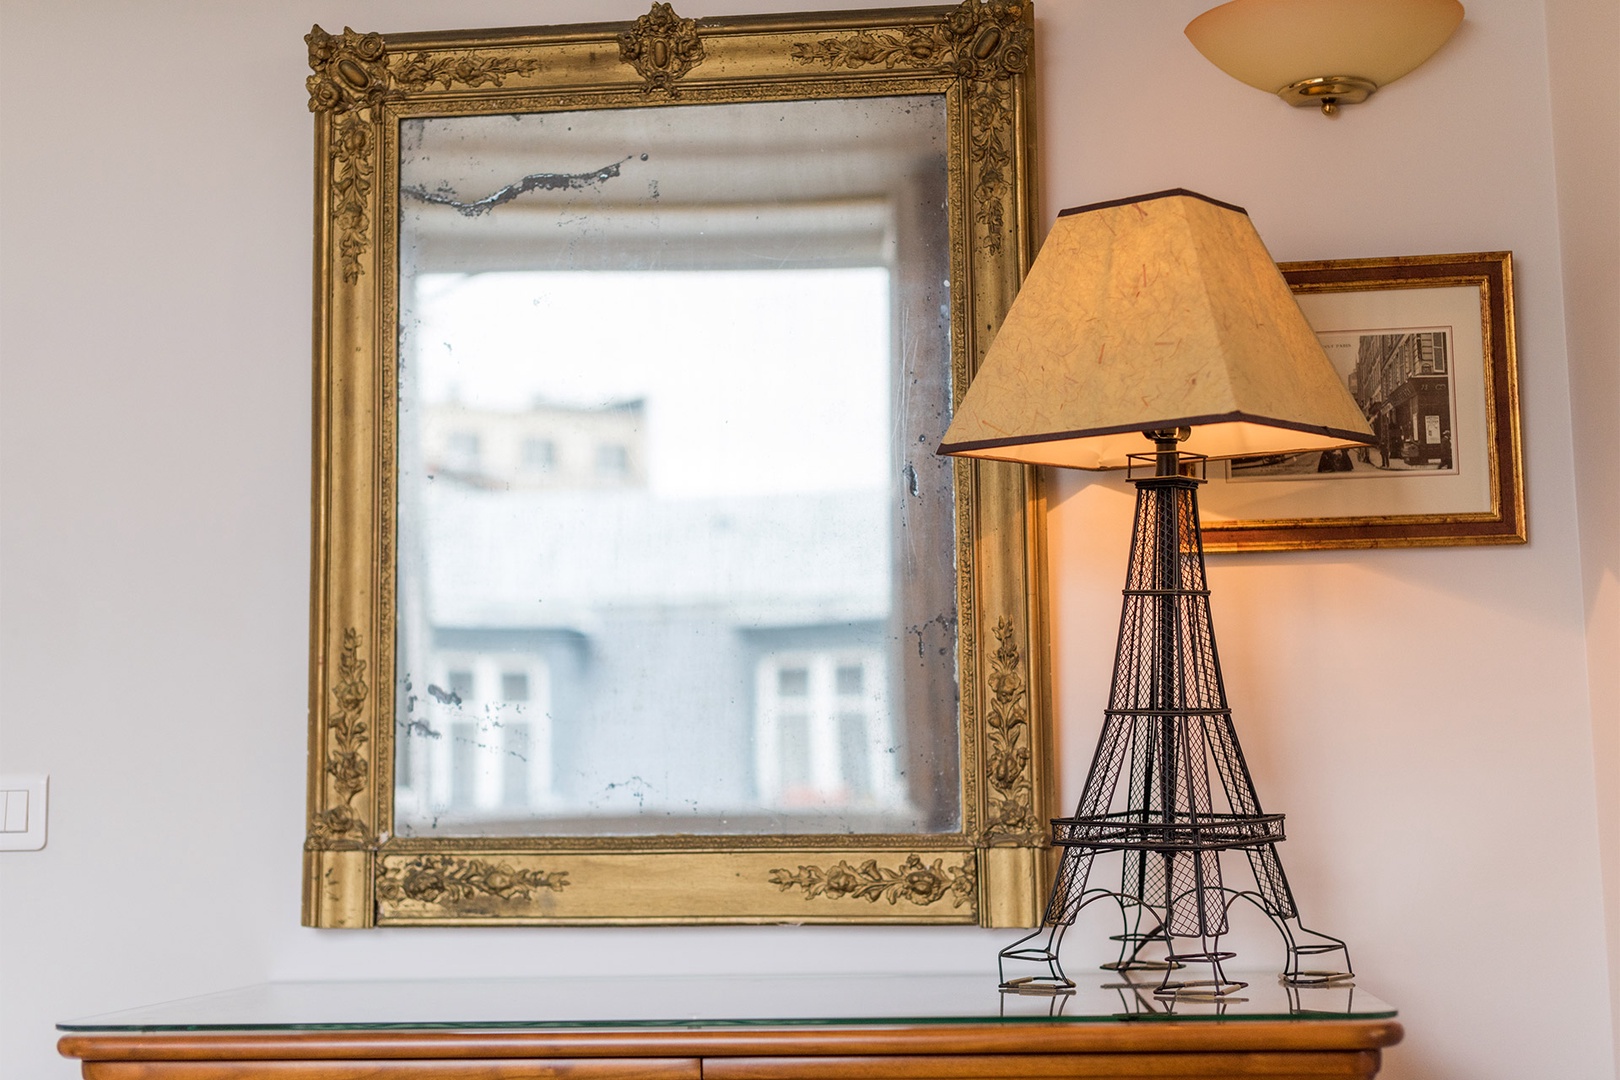 Parisian touches are found throughout the apartment.